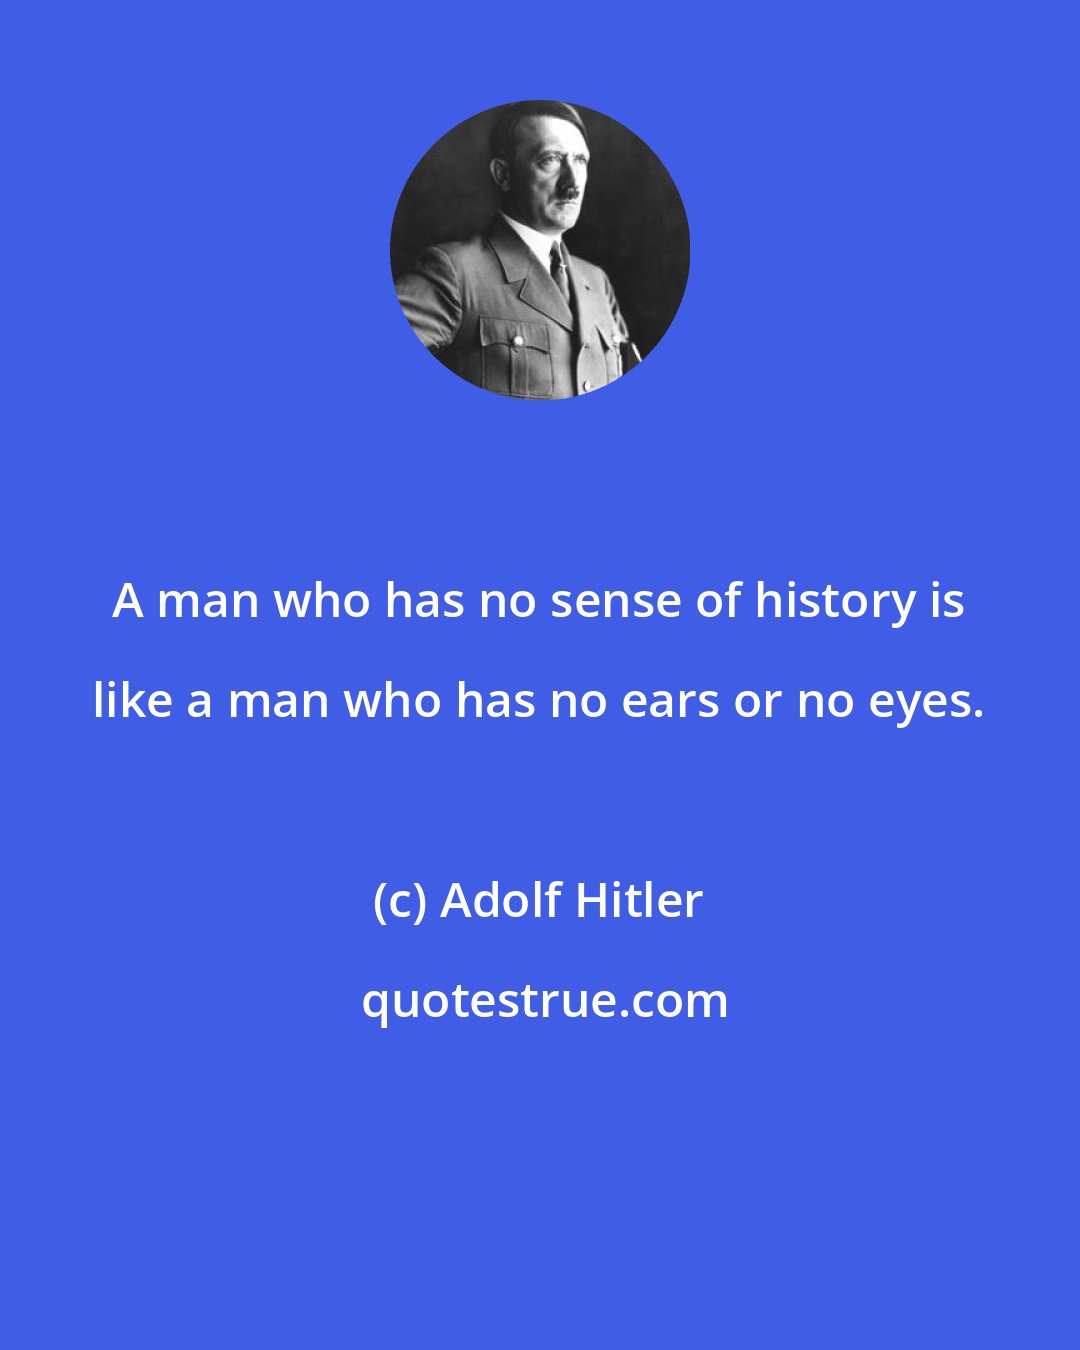 Adolf Hitler: A man who has no sense of history is like a man who has no ears or no eyes.